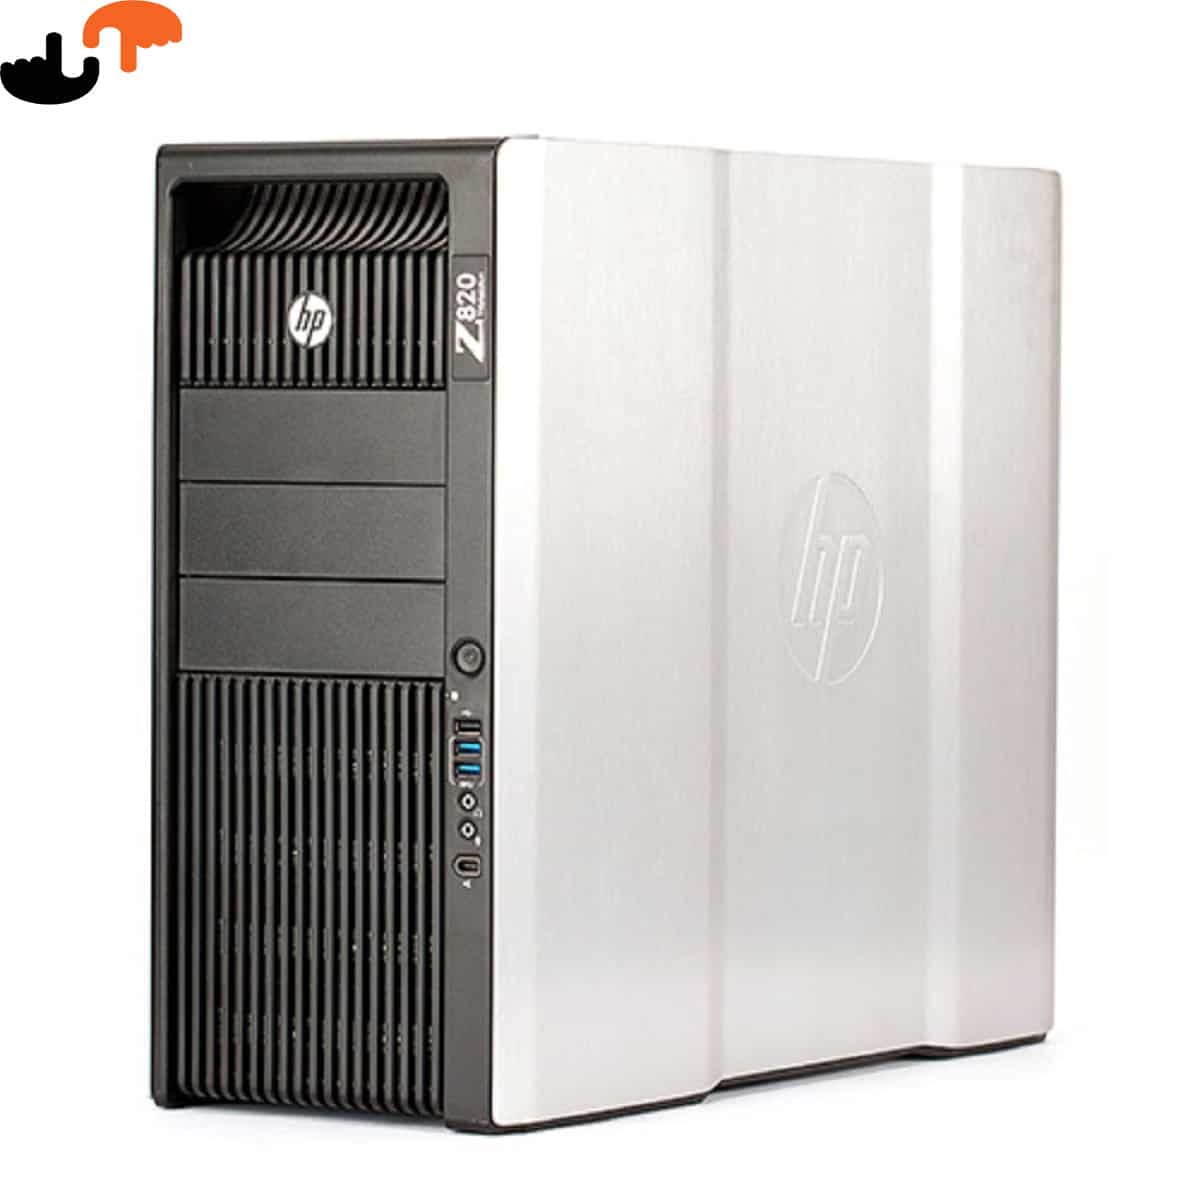  کیس ورک استیشن HP Workstation Z620